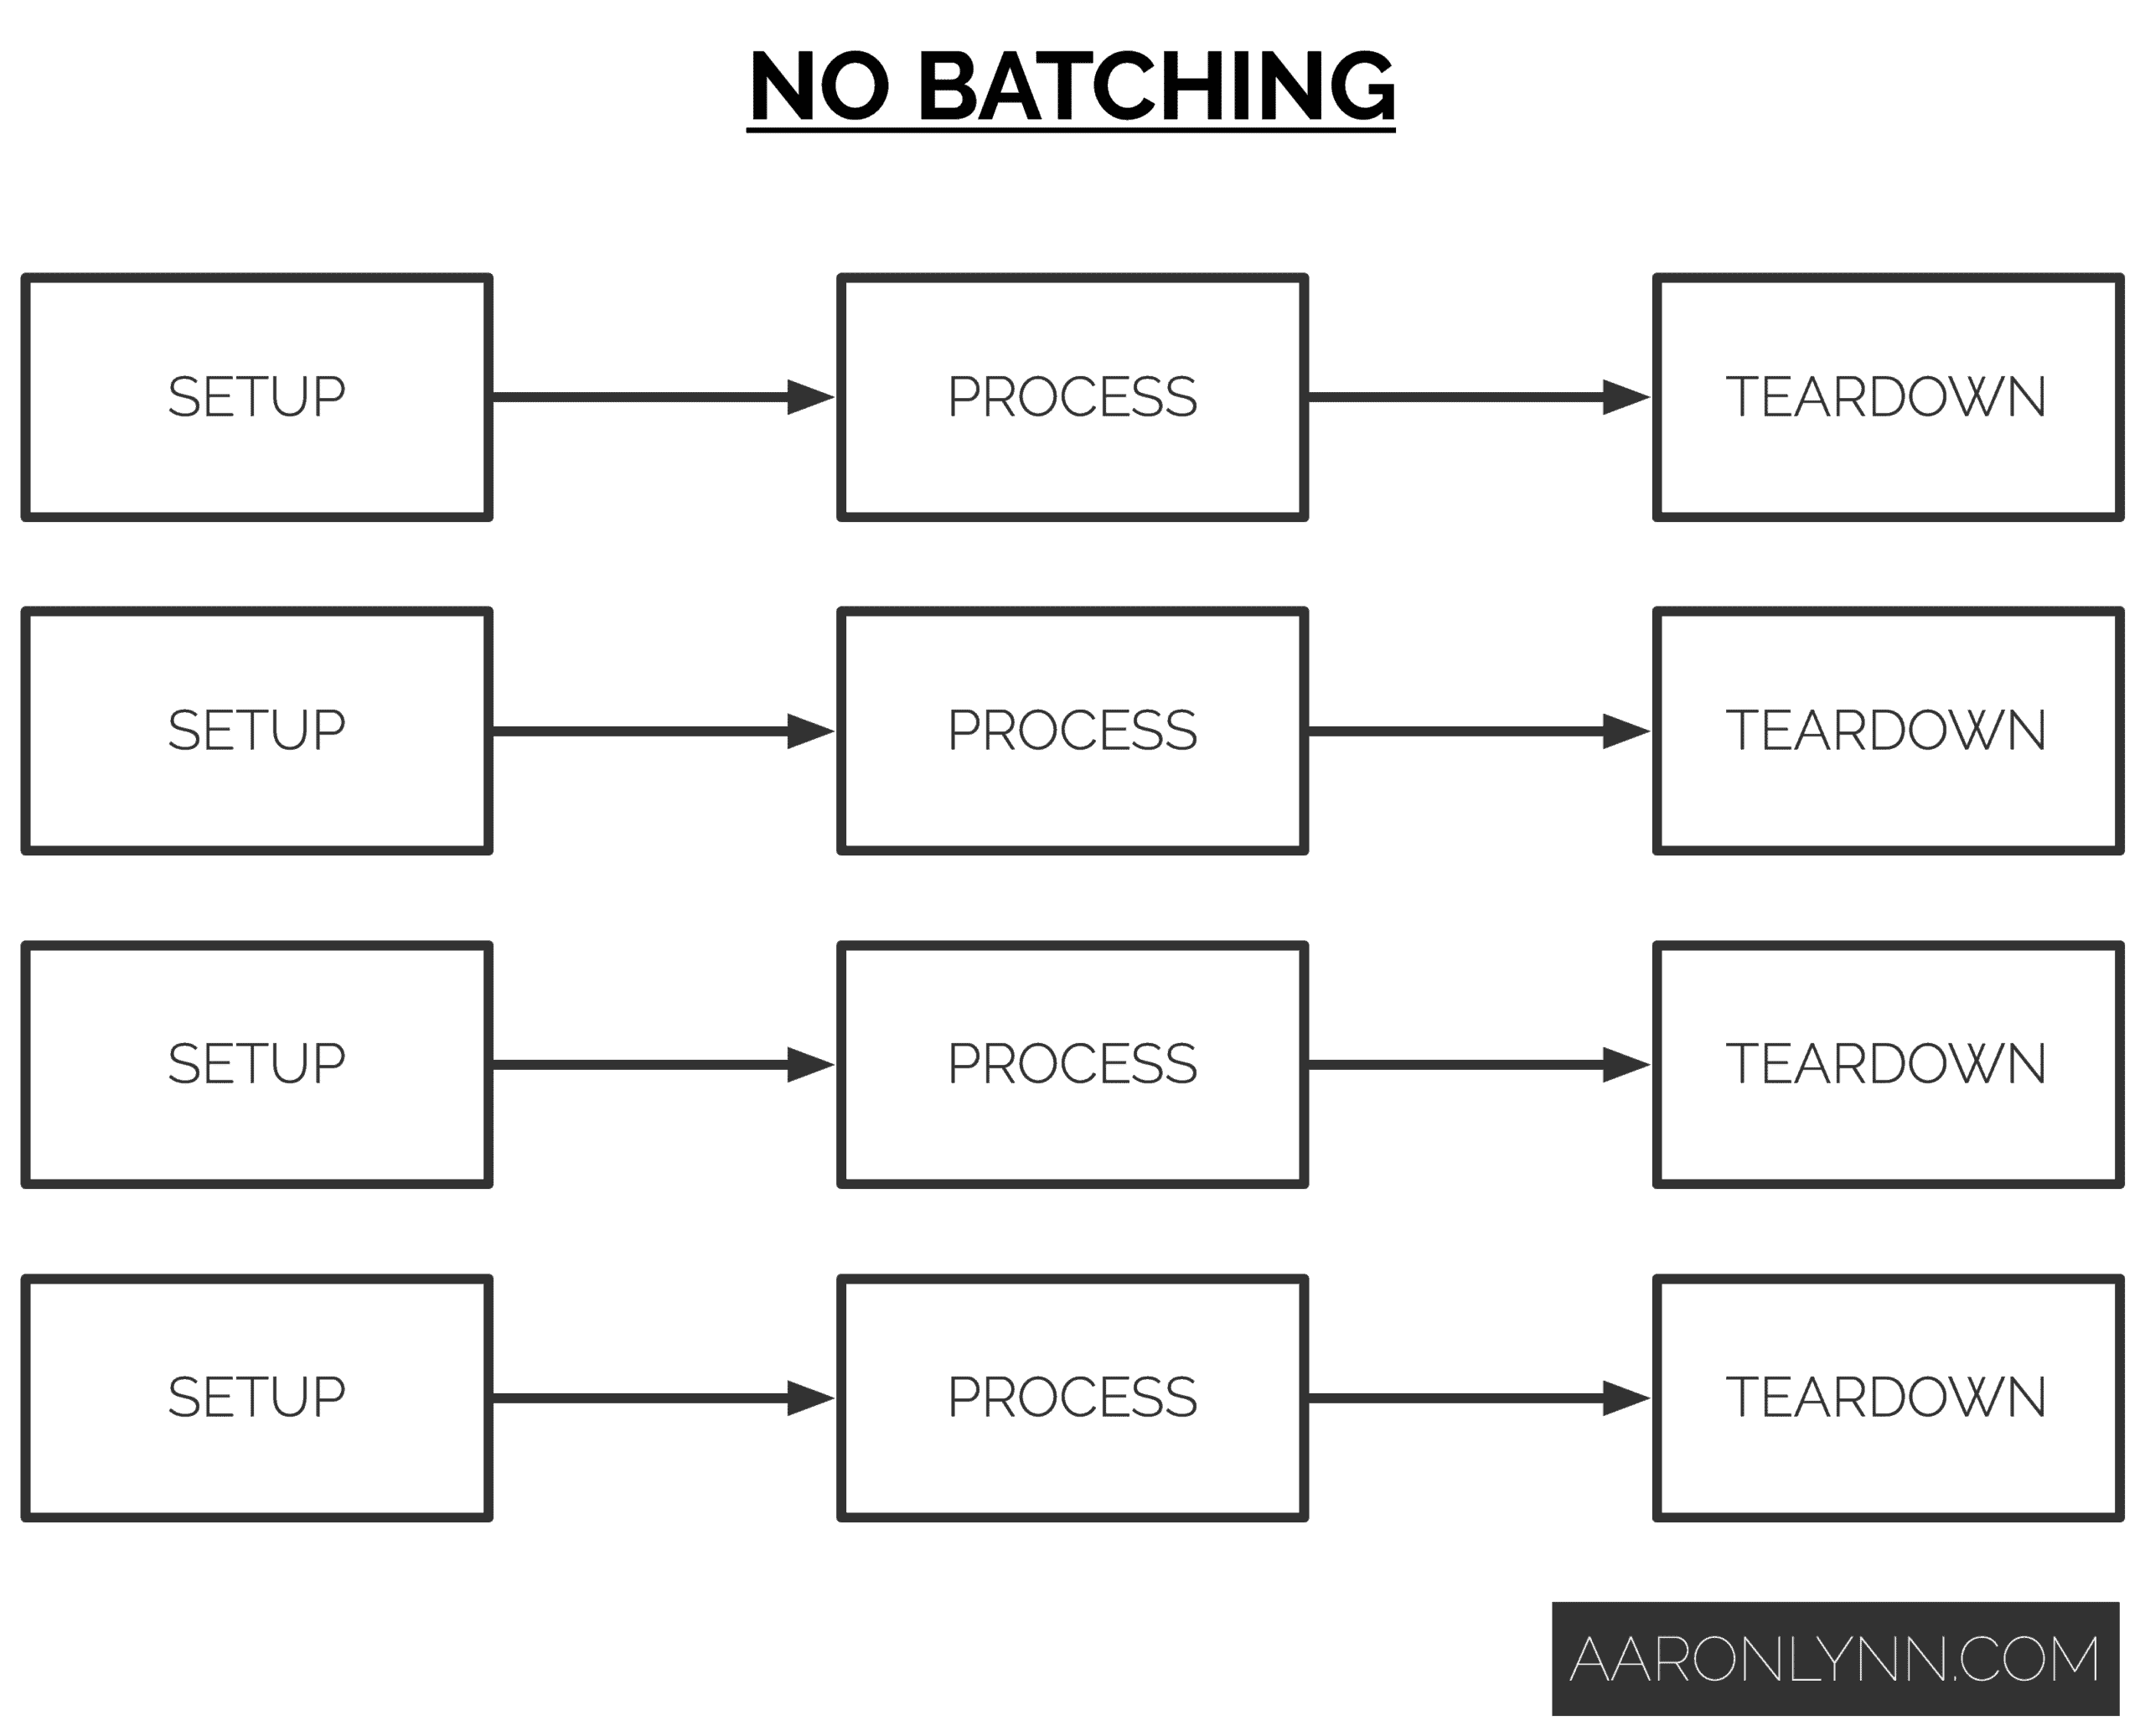 No Batching